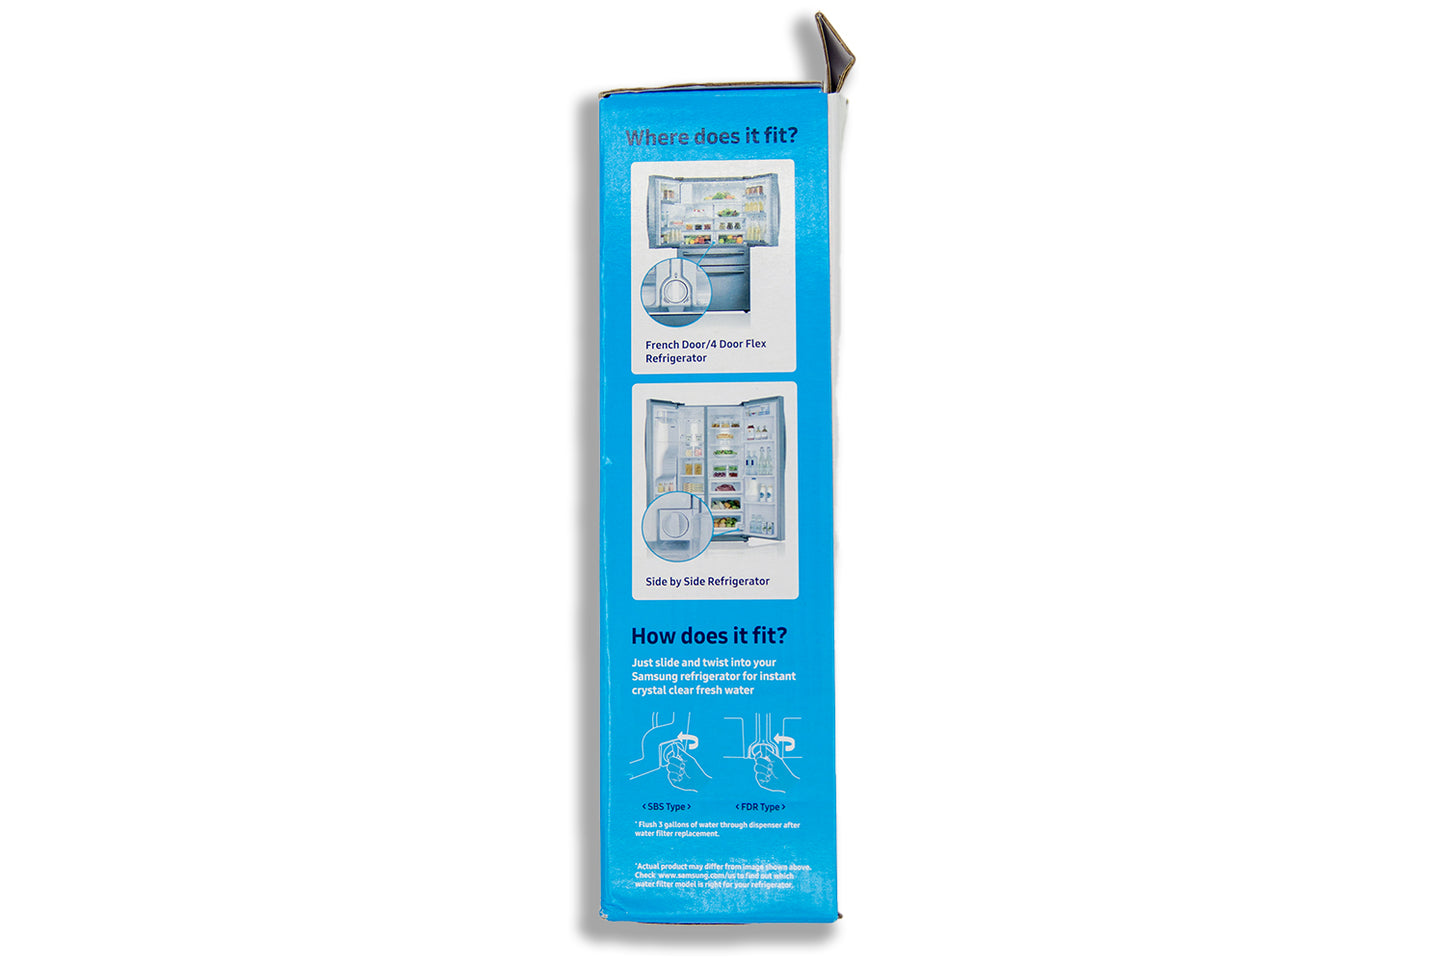 Samsung HAF-CIN/EXP Refrigerator Water Filter DA29-00020B